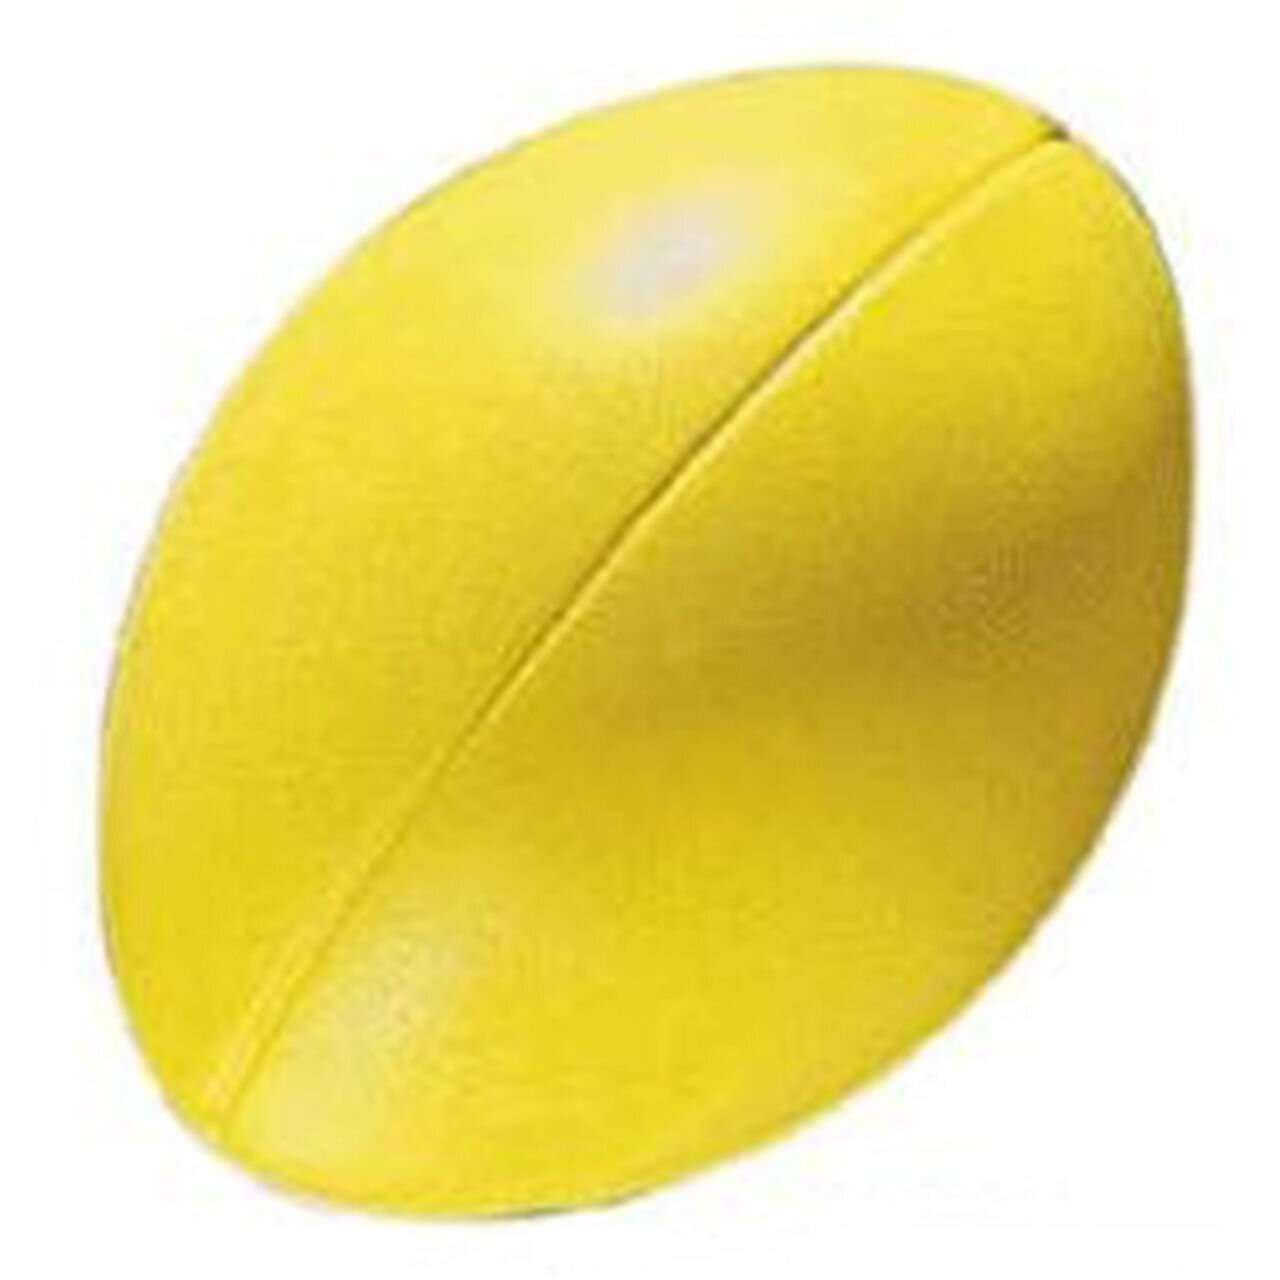 SOFT SPONGE RUGBY BALL LIGHTWEIGHT INDOOR & OUTDOOR PLAY FOAM BALL YELLOW SIZE-4